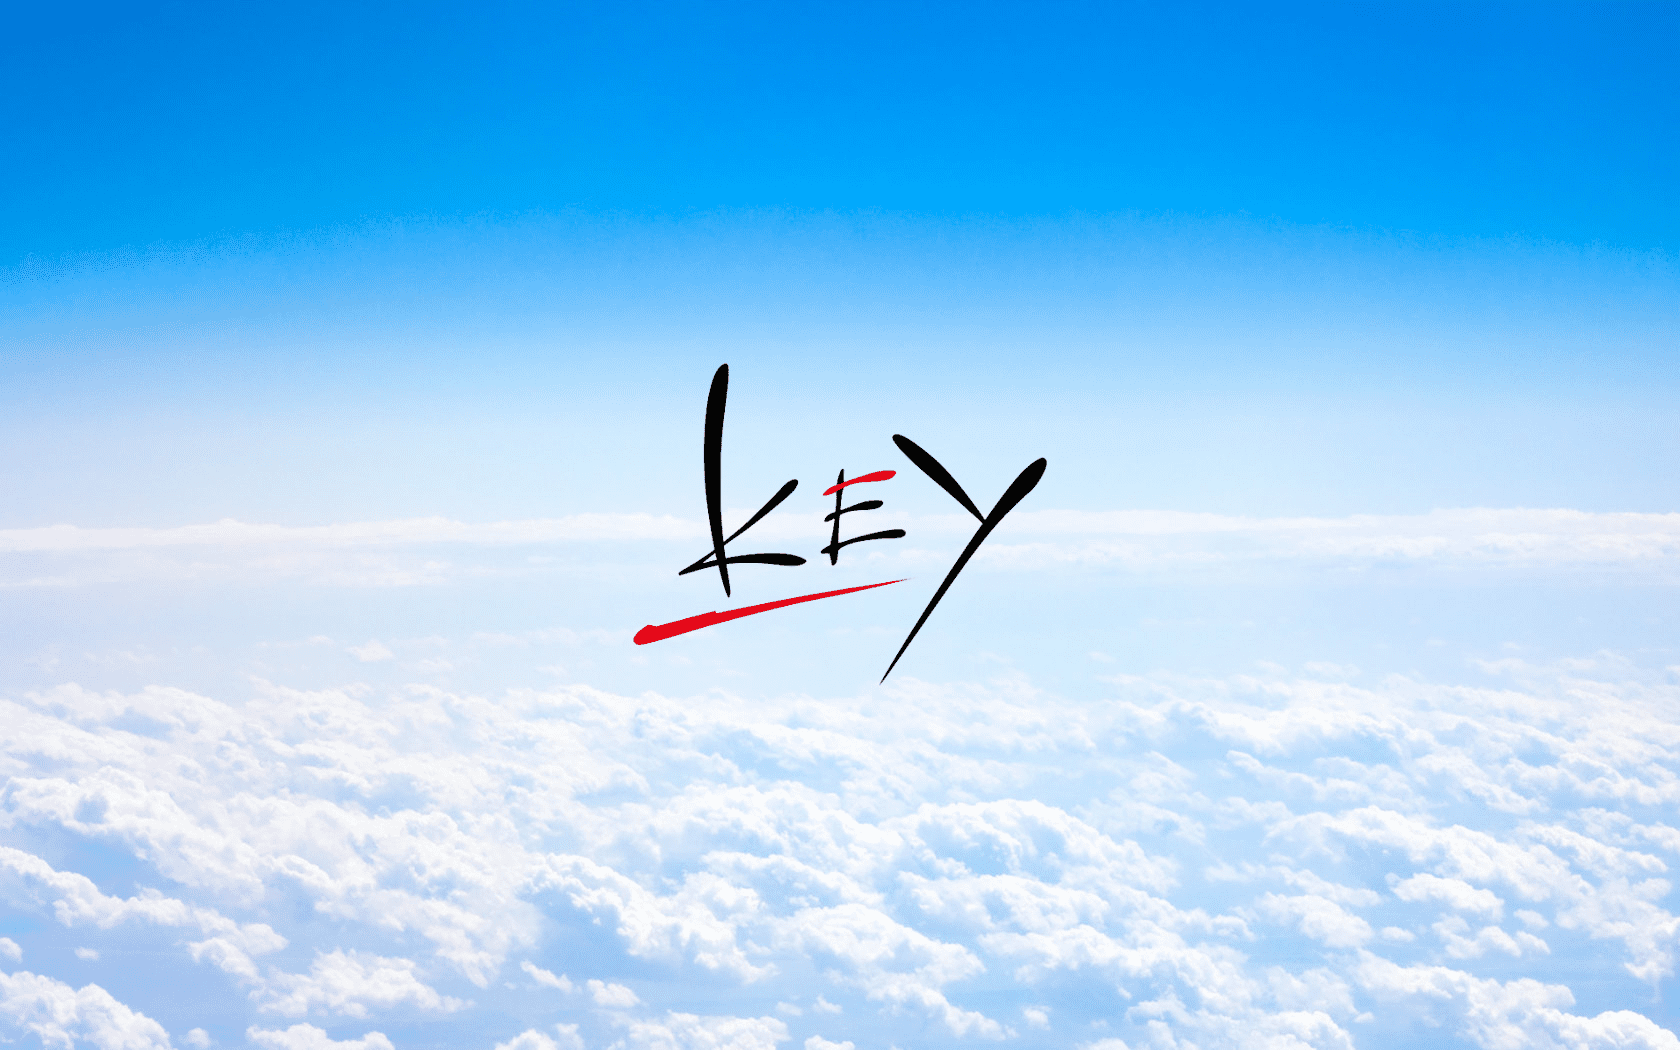 Key: Visual Novel Studios